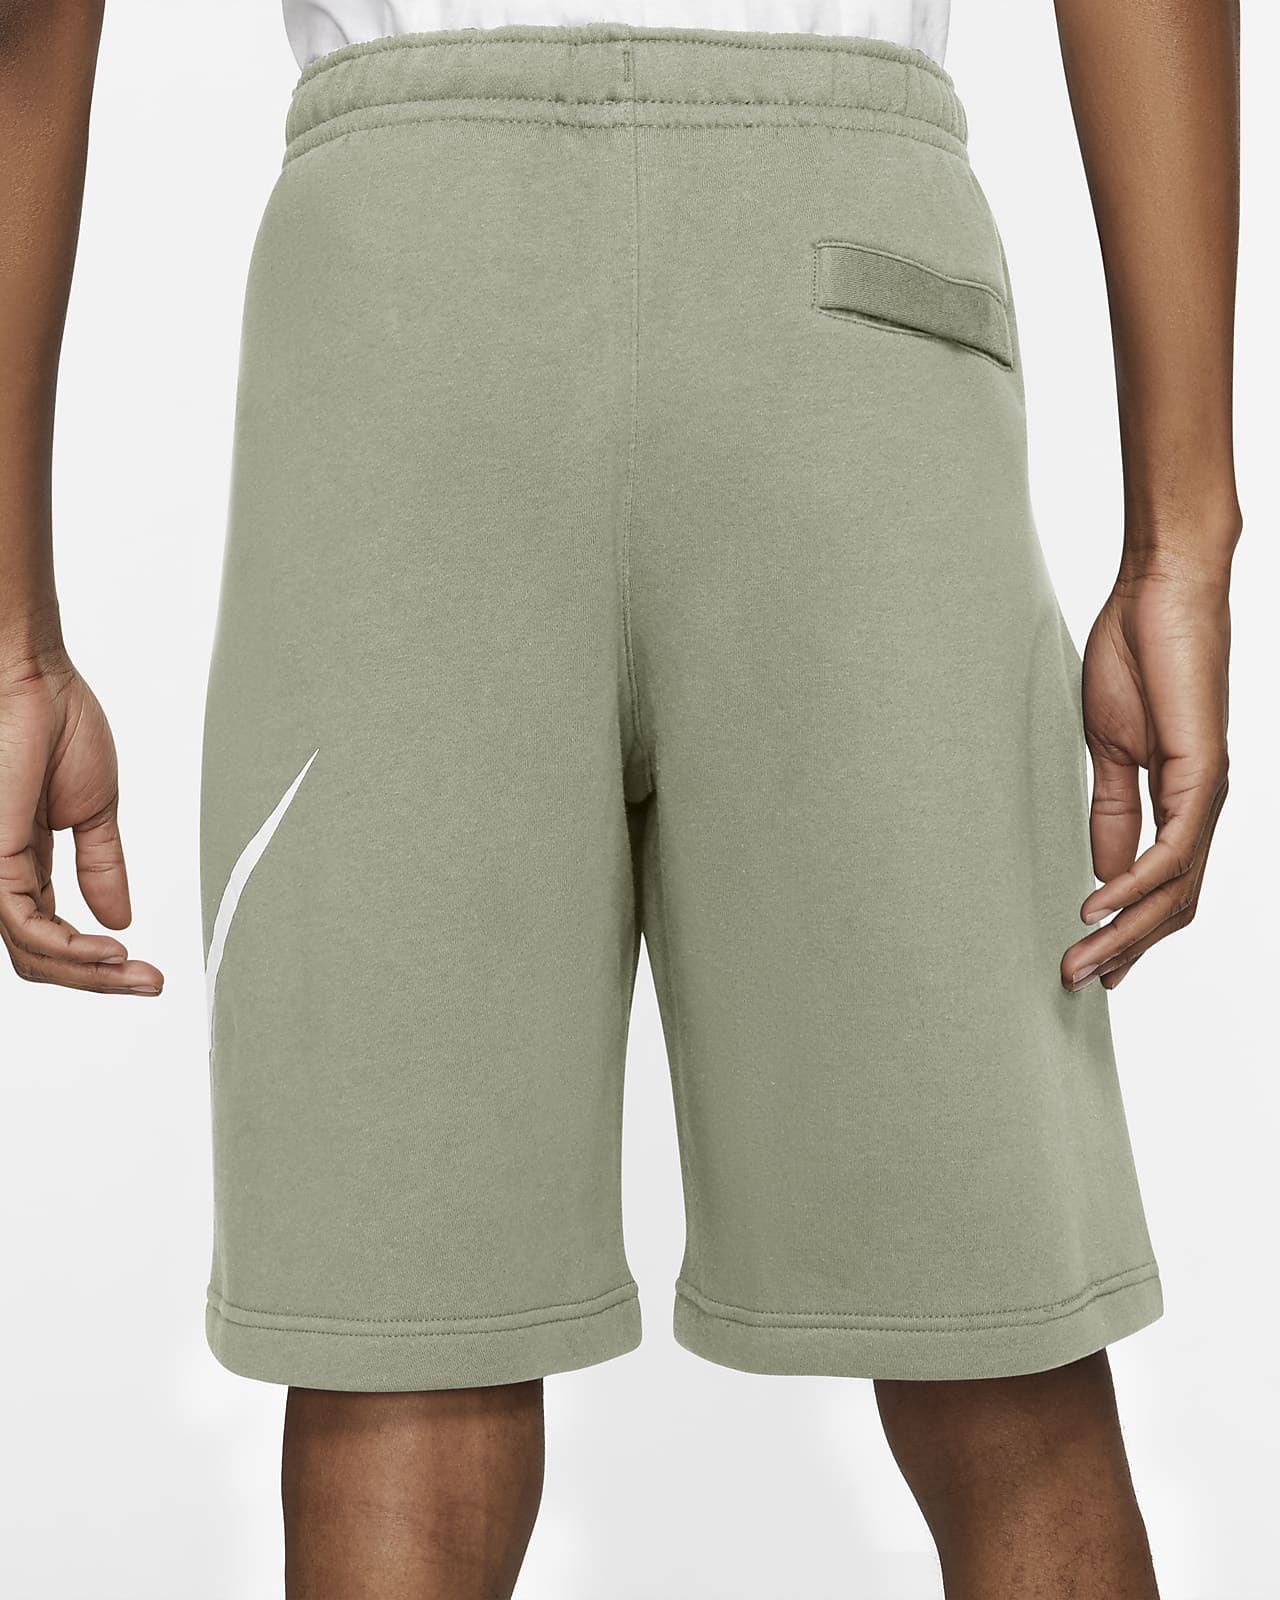 men's graphic shorts nike sportswear club